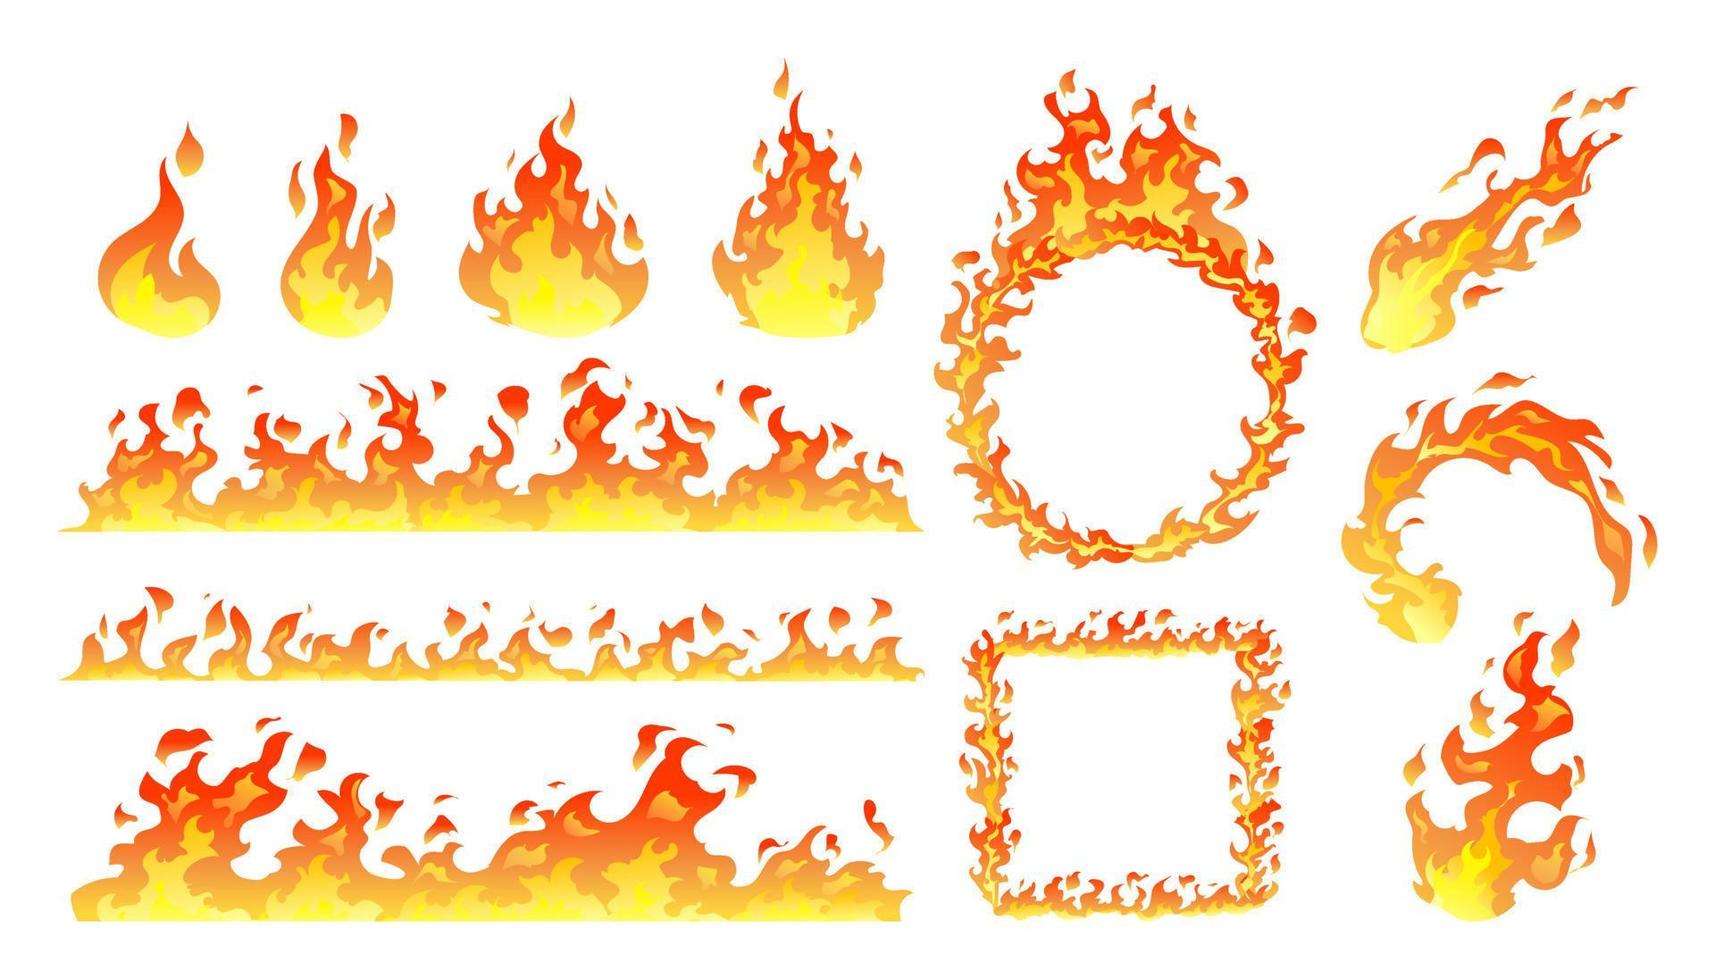 verzameling van vuurvlammen, brandend vreugdevuur, vuurbal, hitte wildvuur, brandend effect cartoon afbeelding vector